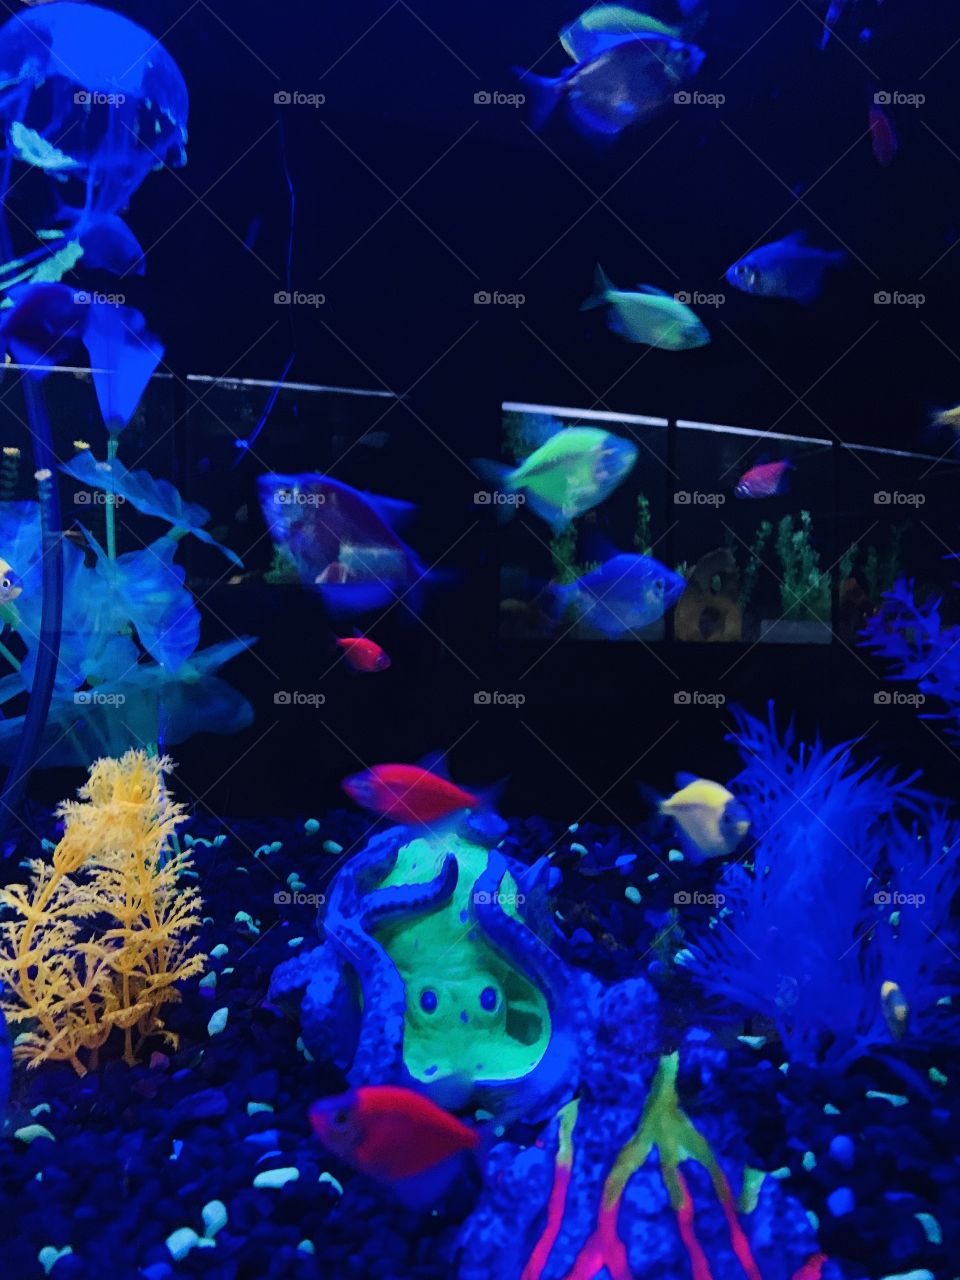 Terra fish in an aquarium 